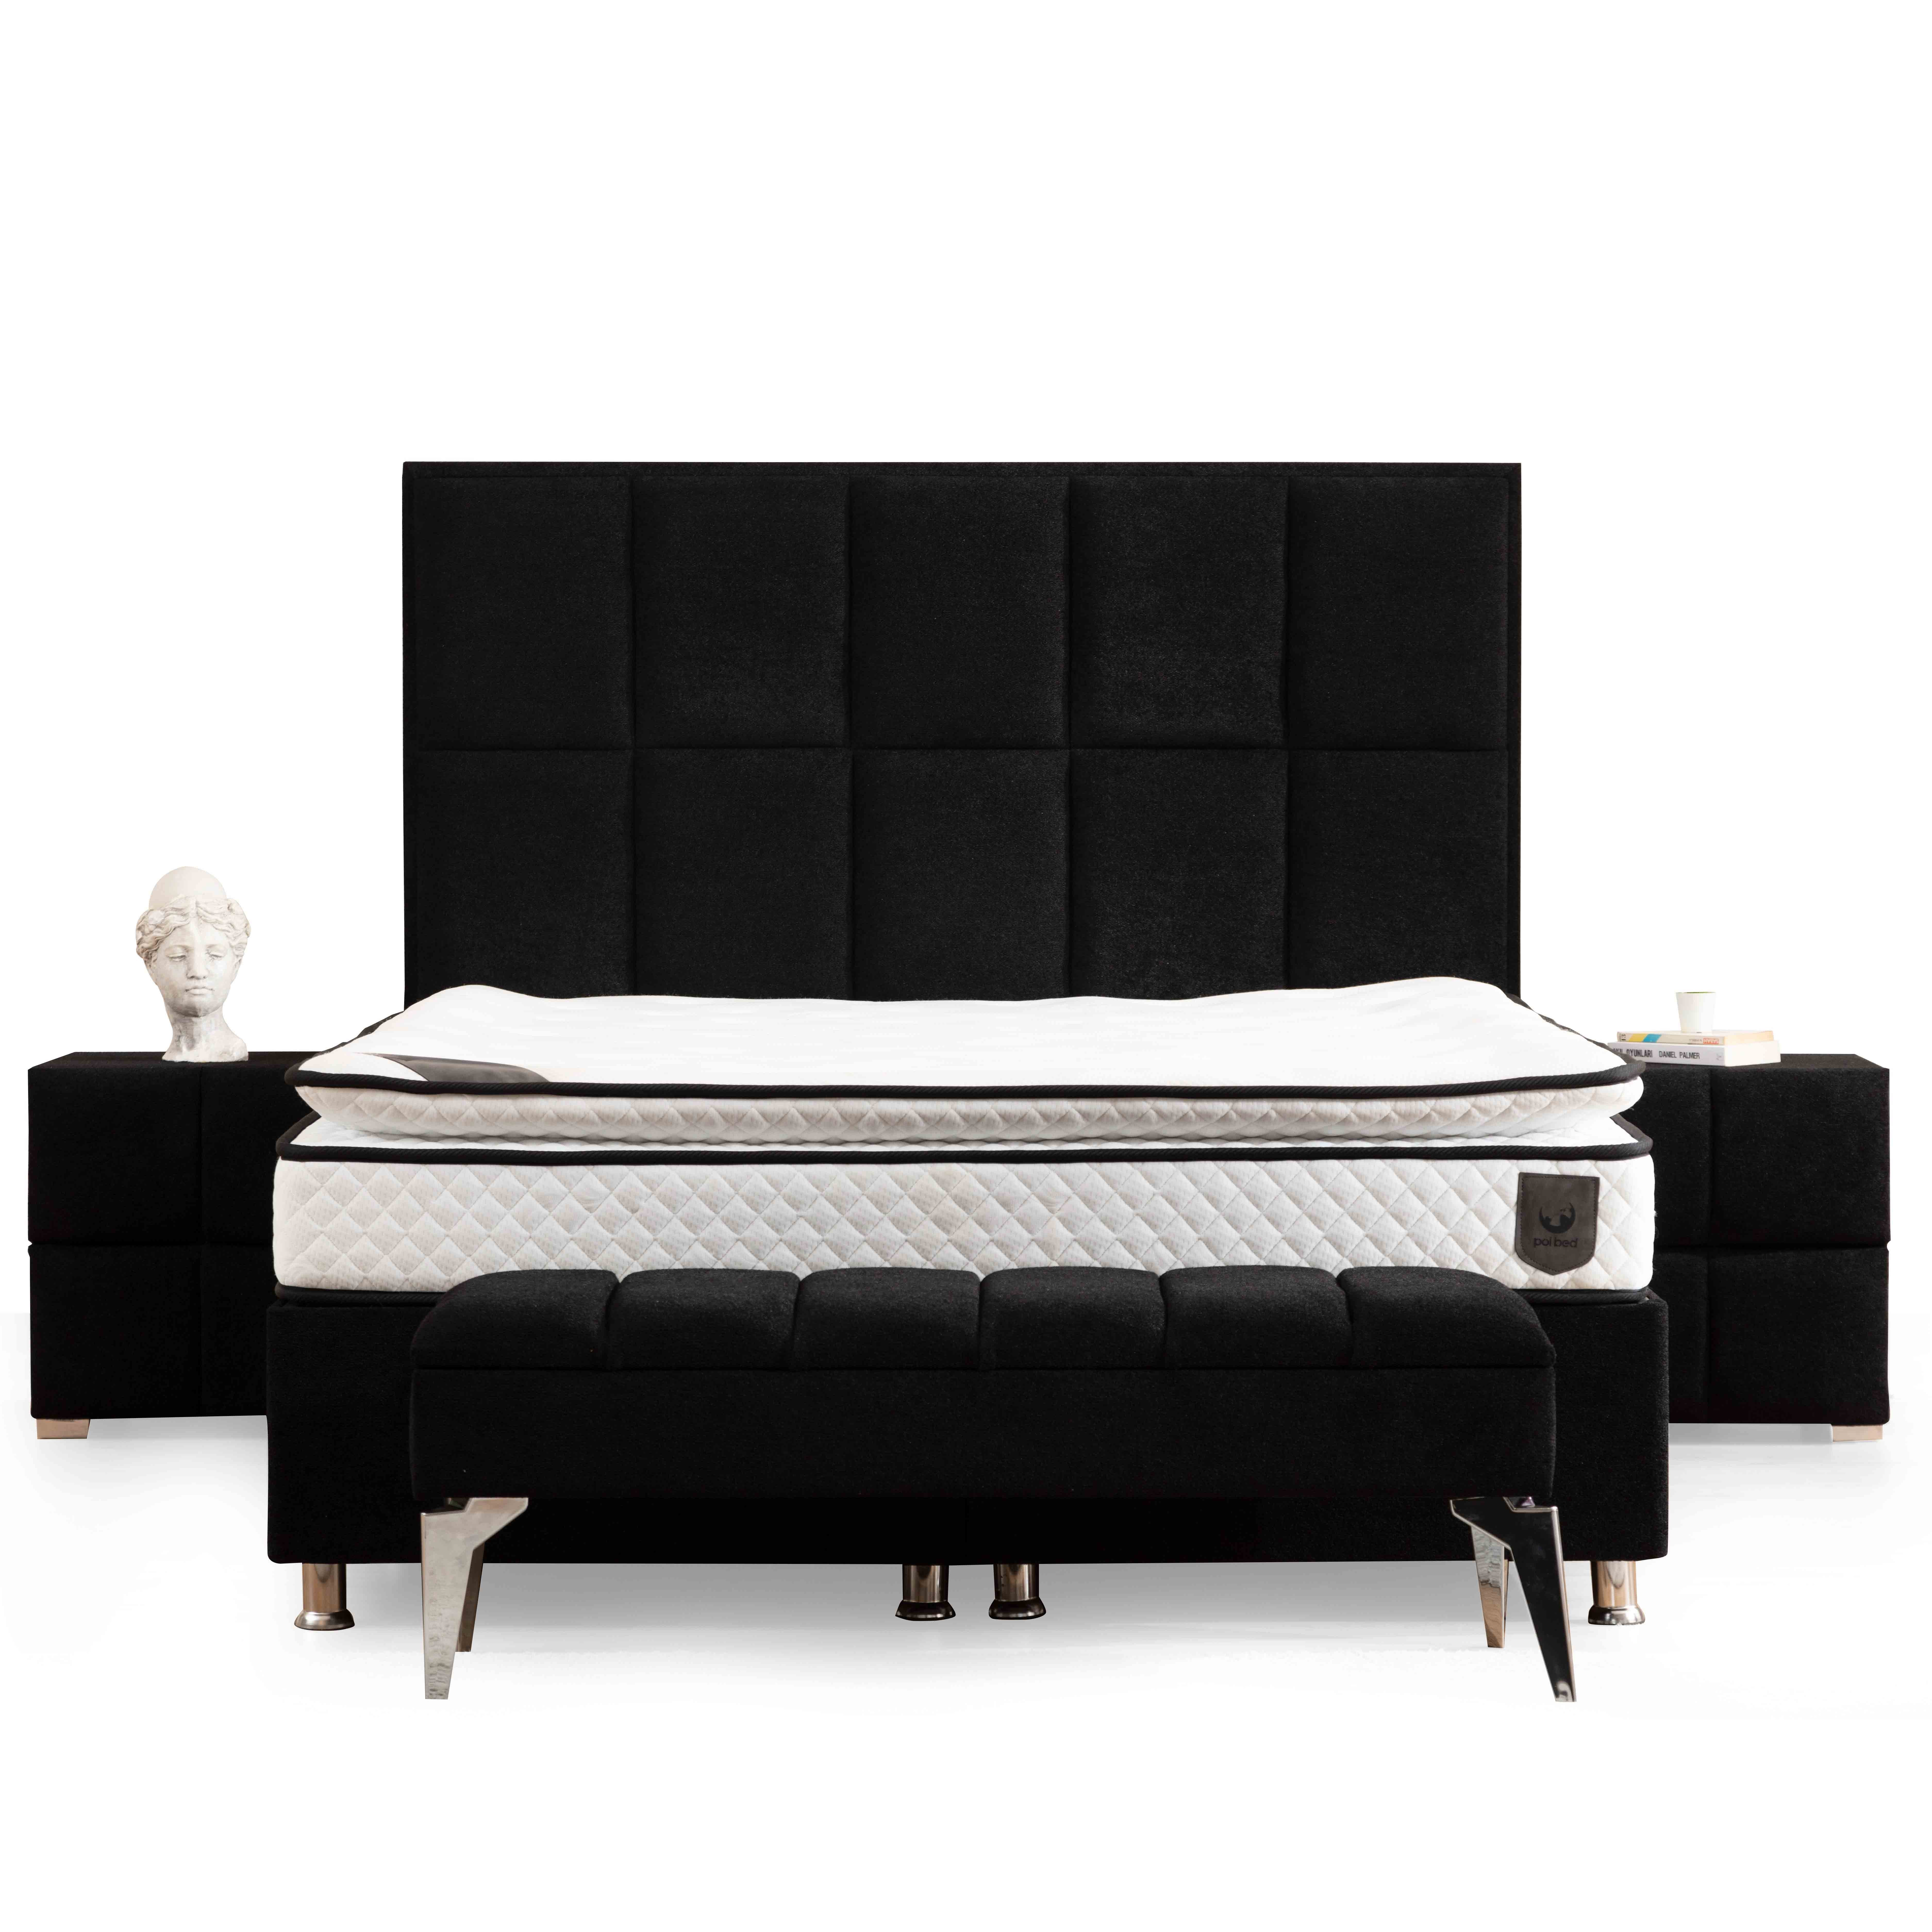 Lovita Bed With Storage 140*190